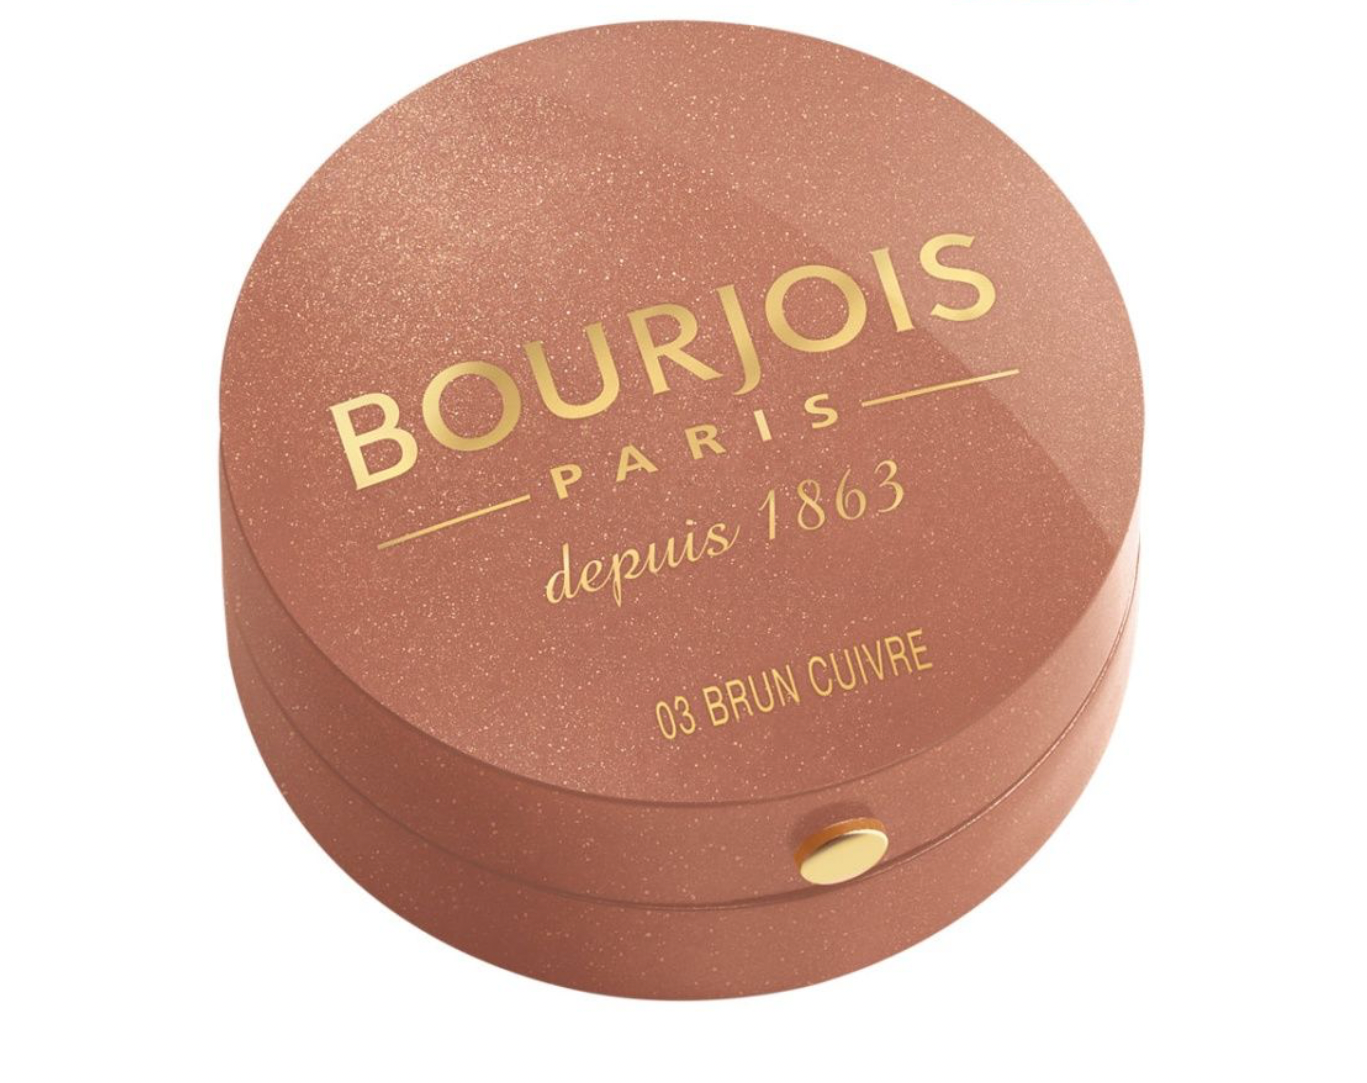 Буржуа Париж / Bourjois Paris - Румяна Blusher тон 03 Brun Cuivre Медно-коричневый 2,5 г